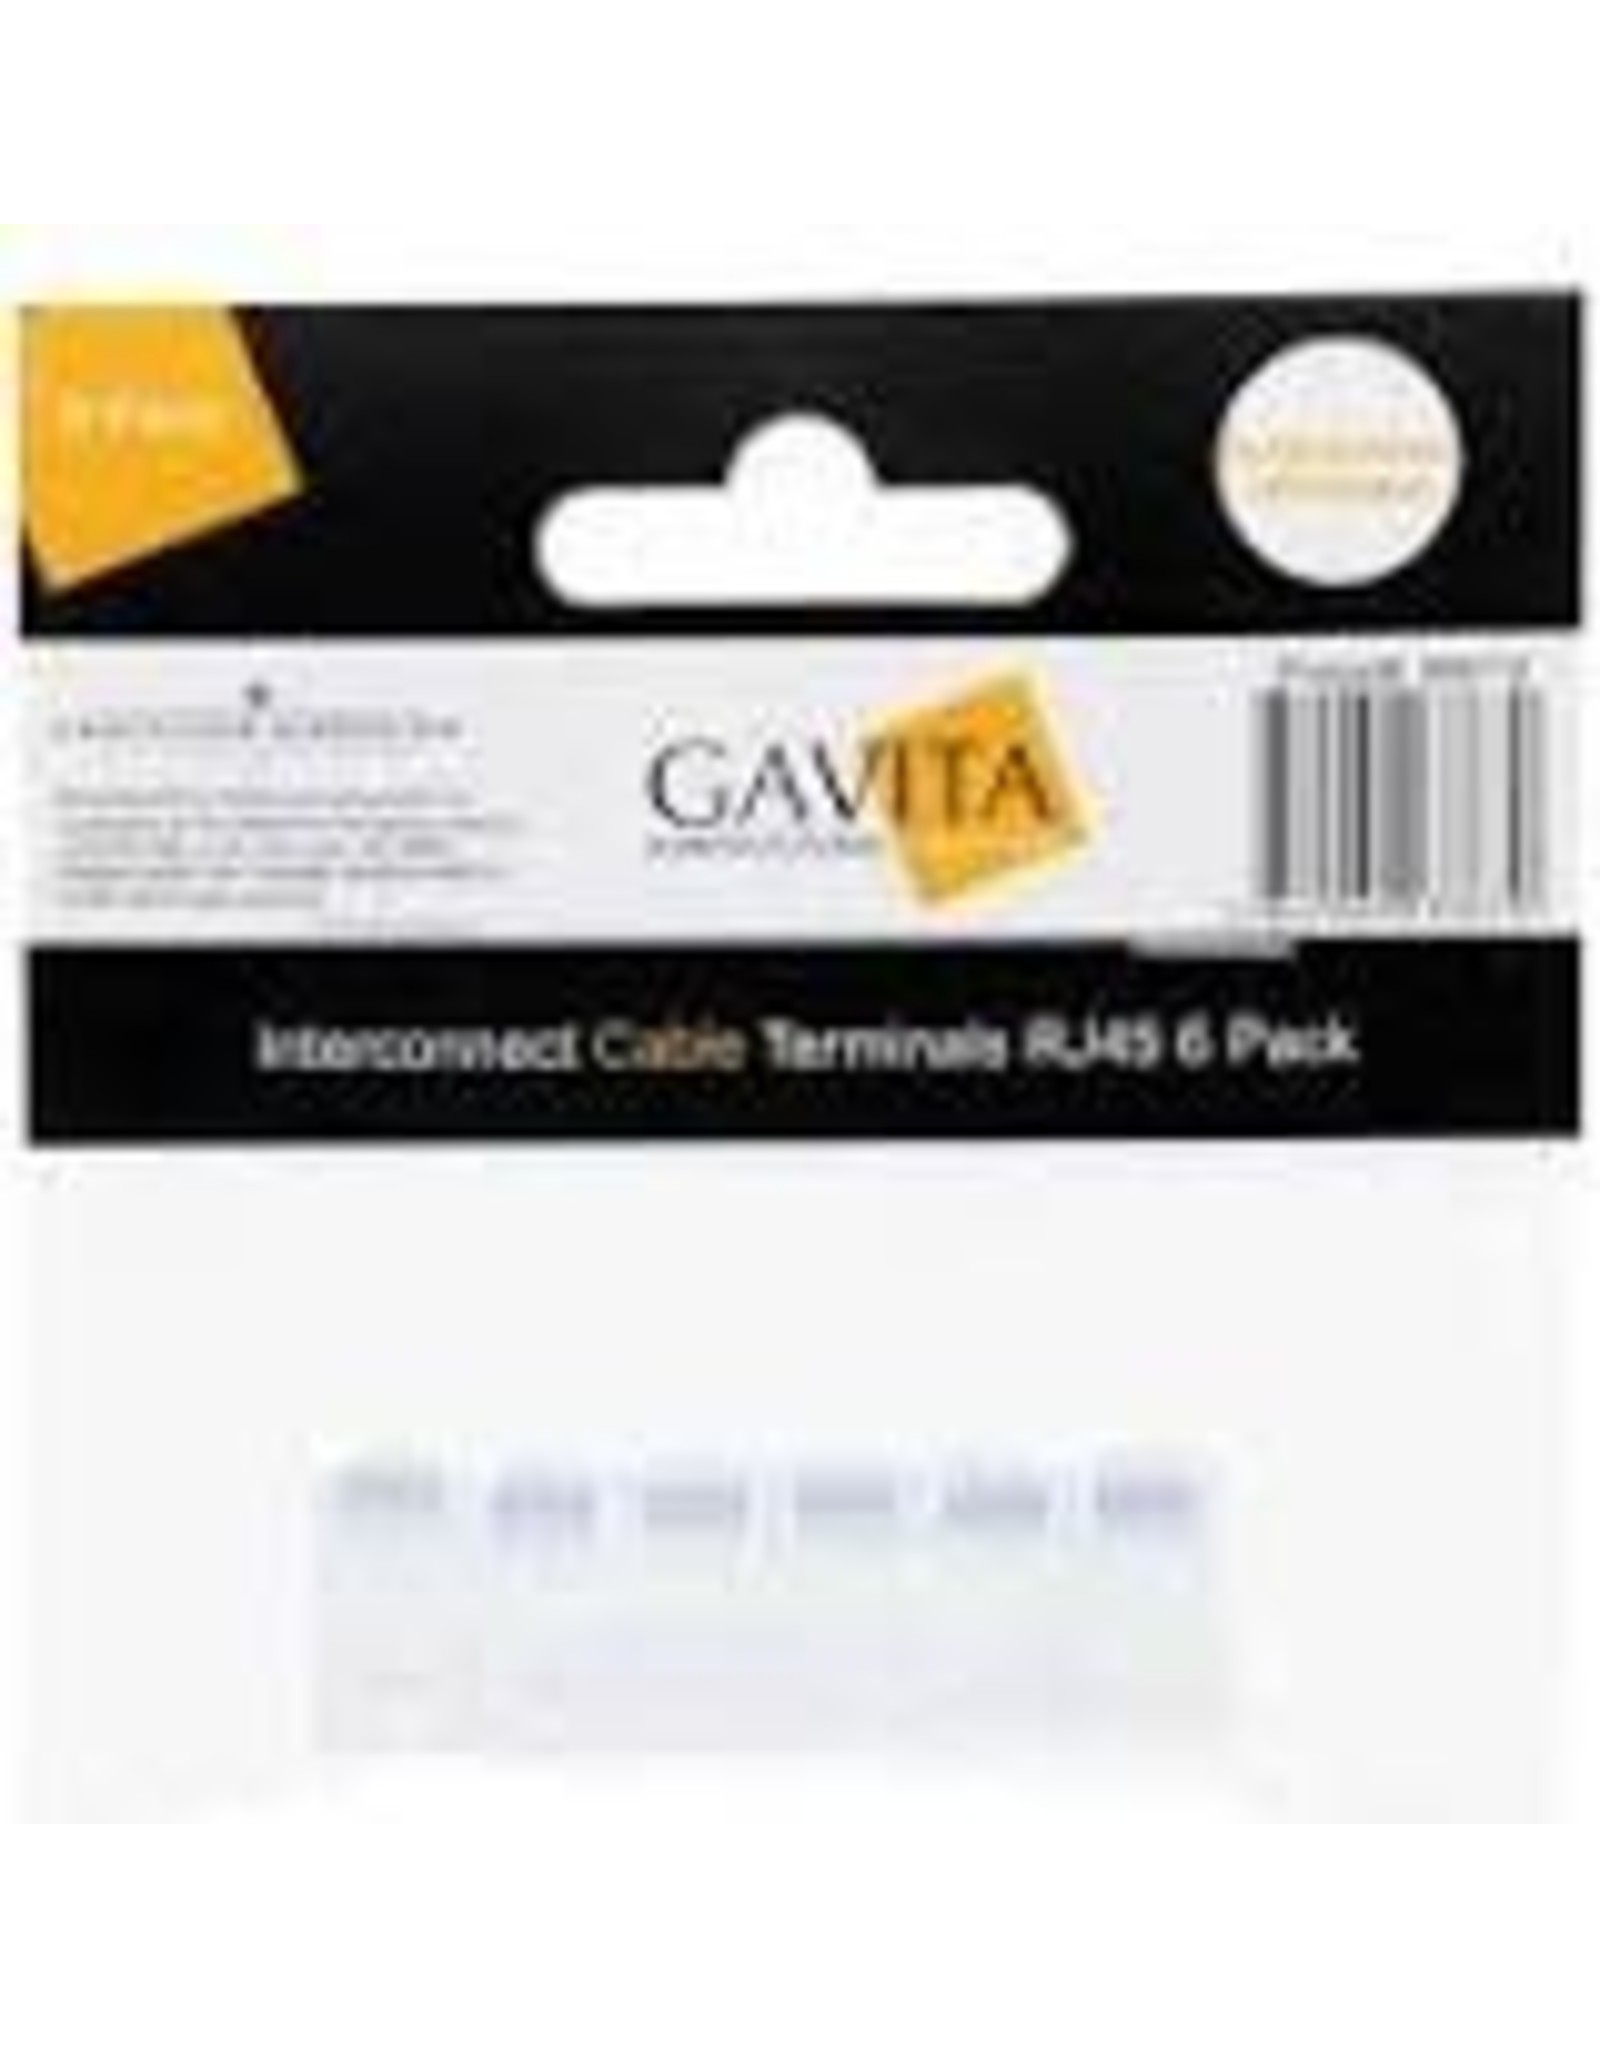 Gavita Gavita E-Series LED Adapter Interconnect Cable Terminals RJ45 6 Pack